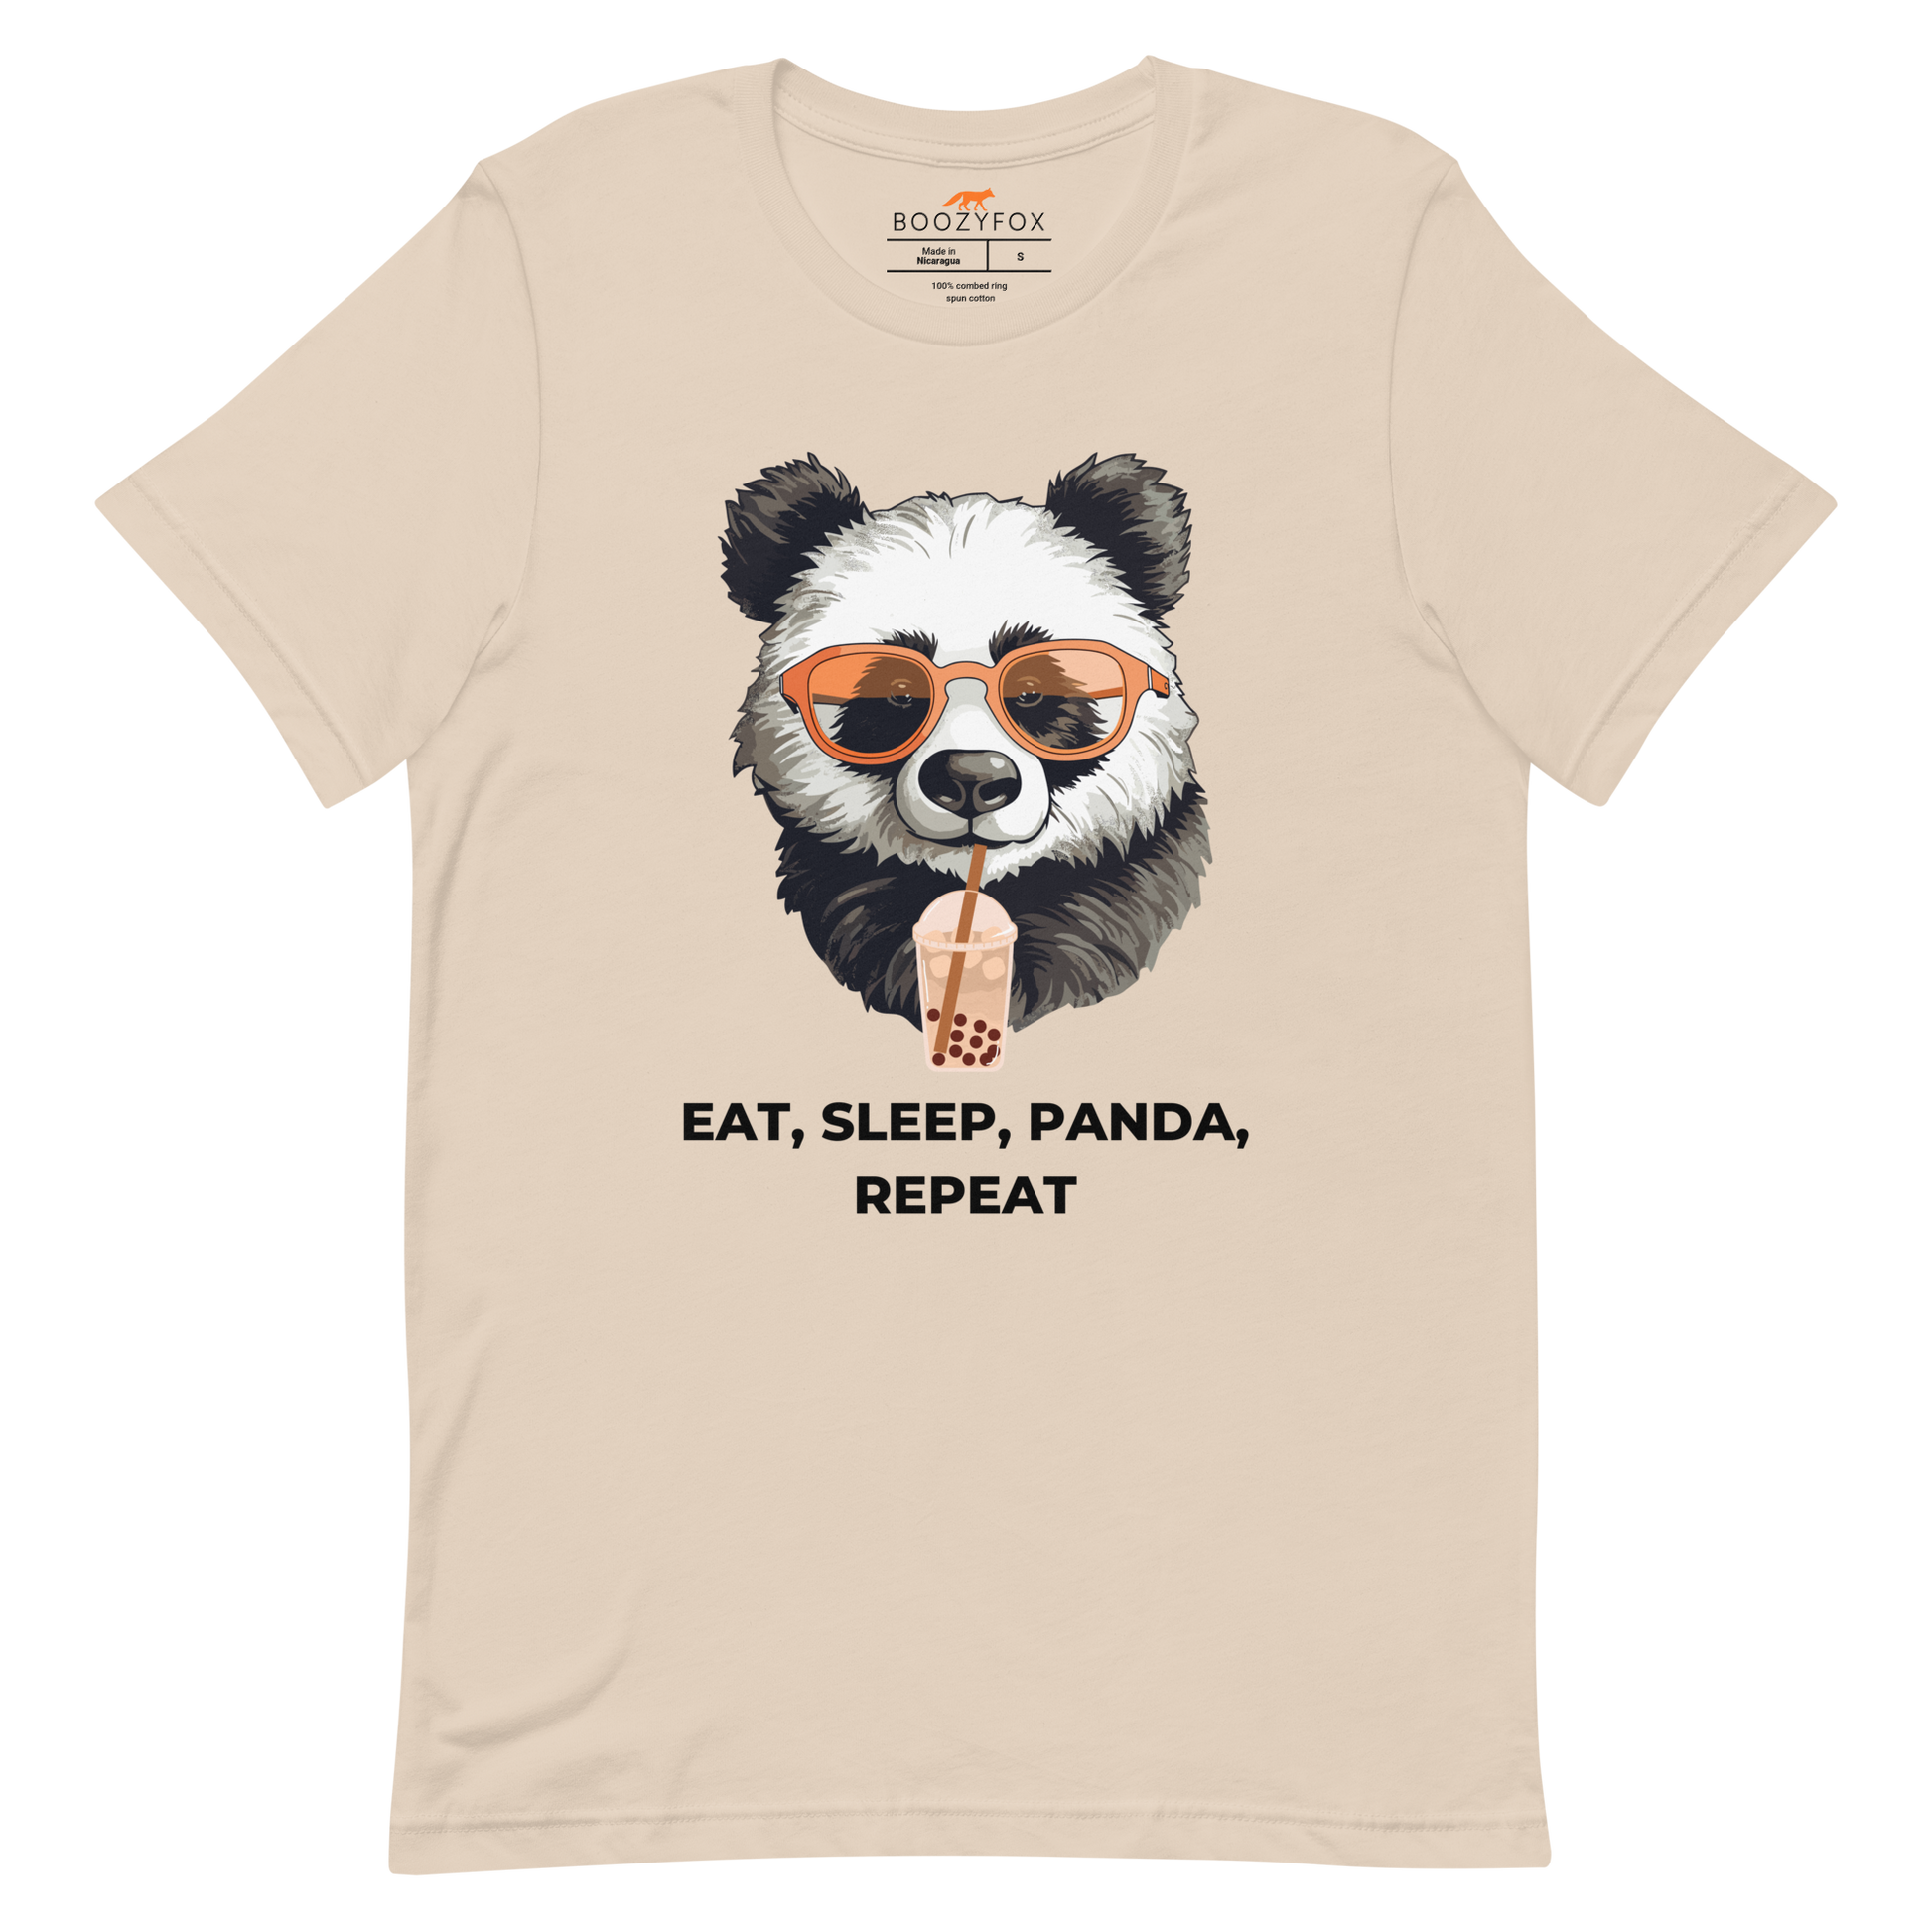 Soft Cream Premium Panda Tee featuring an adorable Eat, Sleep, Panda, Repeat graphic on the chest - Funny Graphic Panda Tees - Boozy Fox